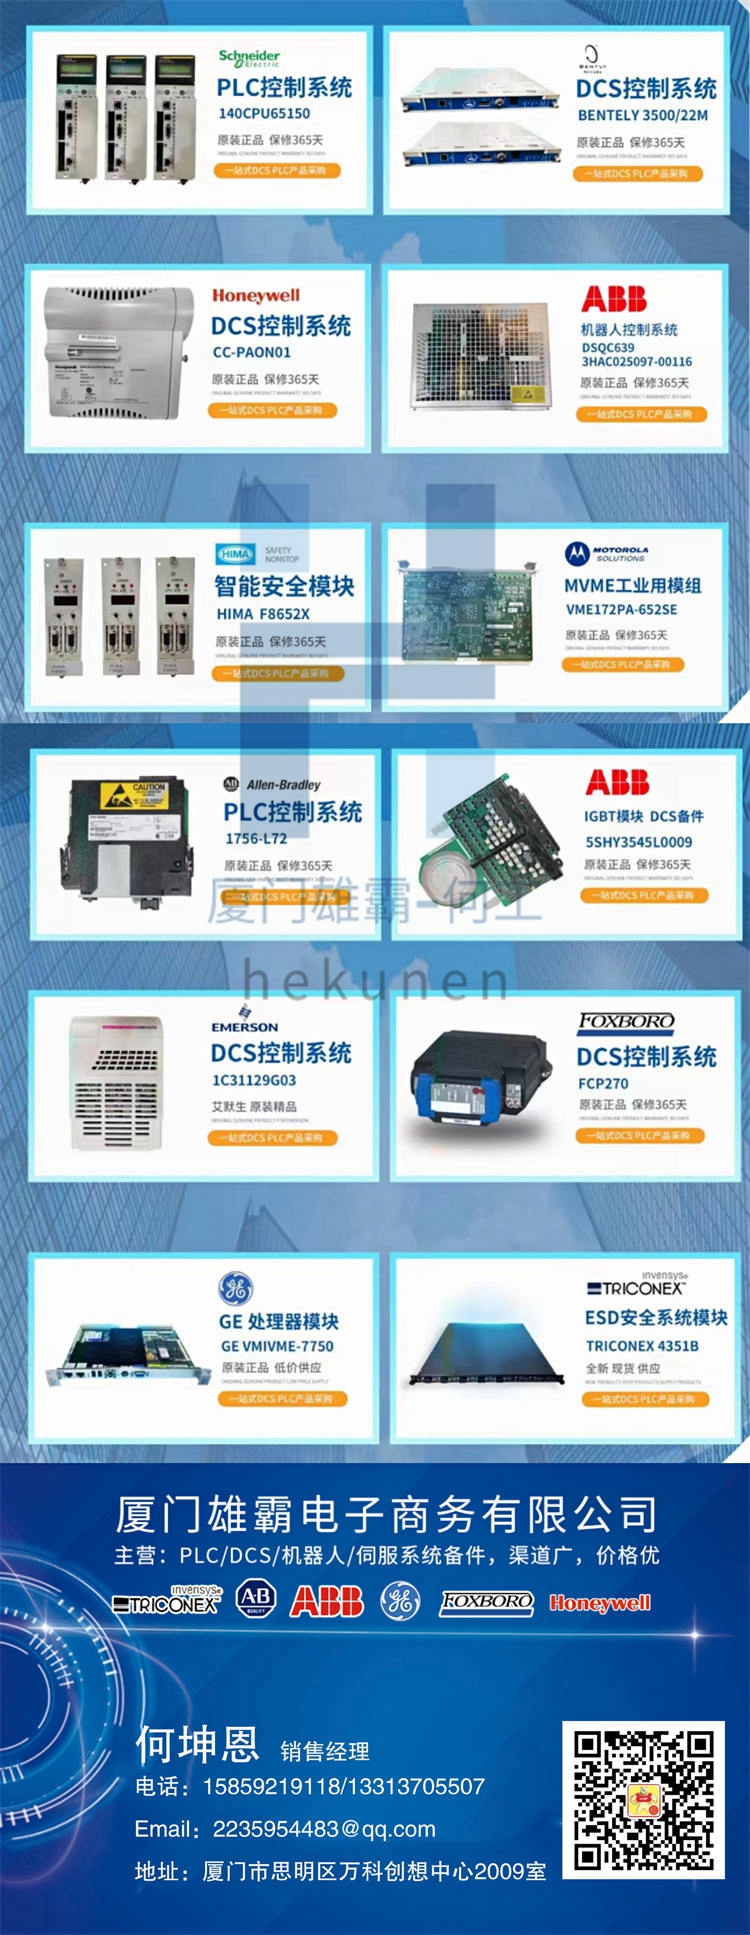 CI858 PLC控制器ABB 输入输出模块-备件销售 